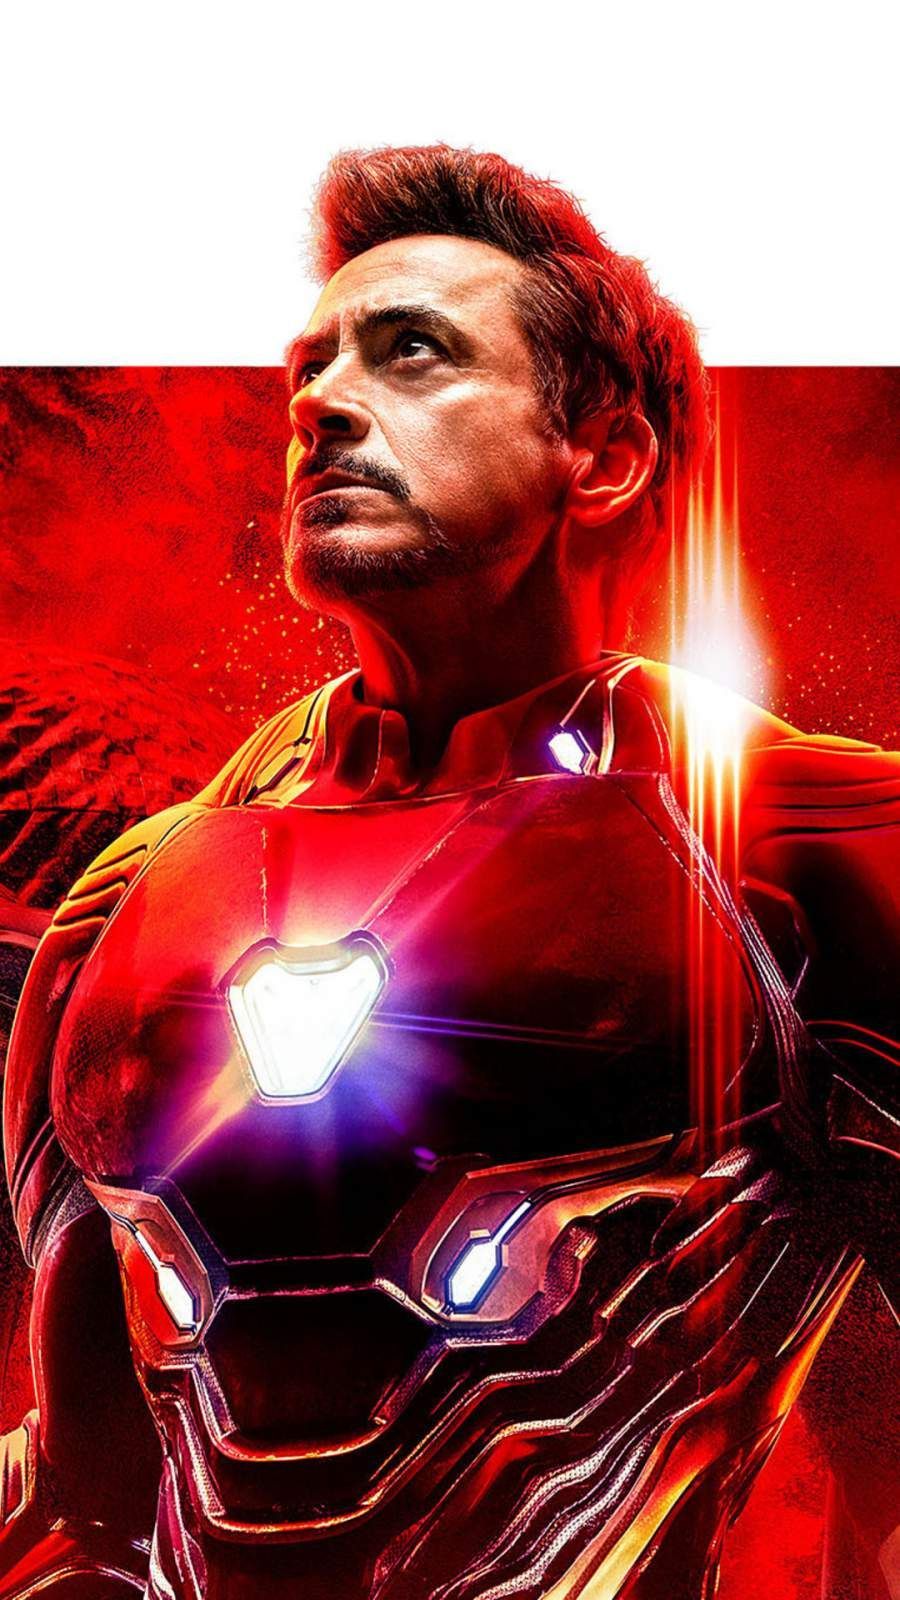 Avengers Iron Man Poster IPhone Wallpaper. Iron man poster, Iron man wallpaper, Iron man HD wallpaper